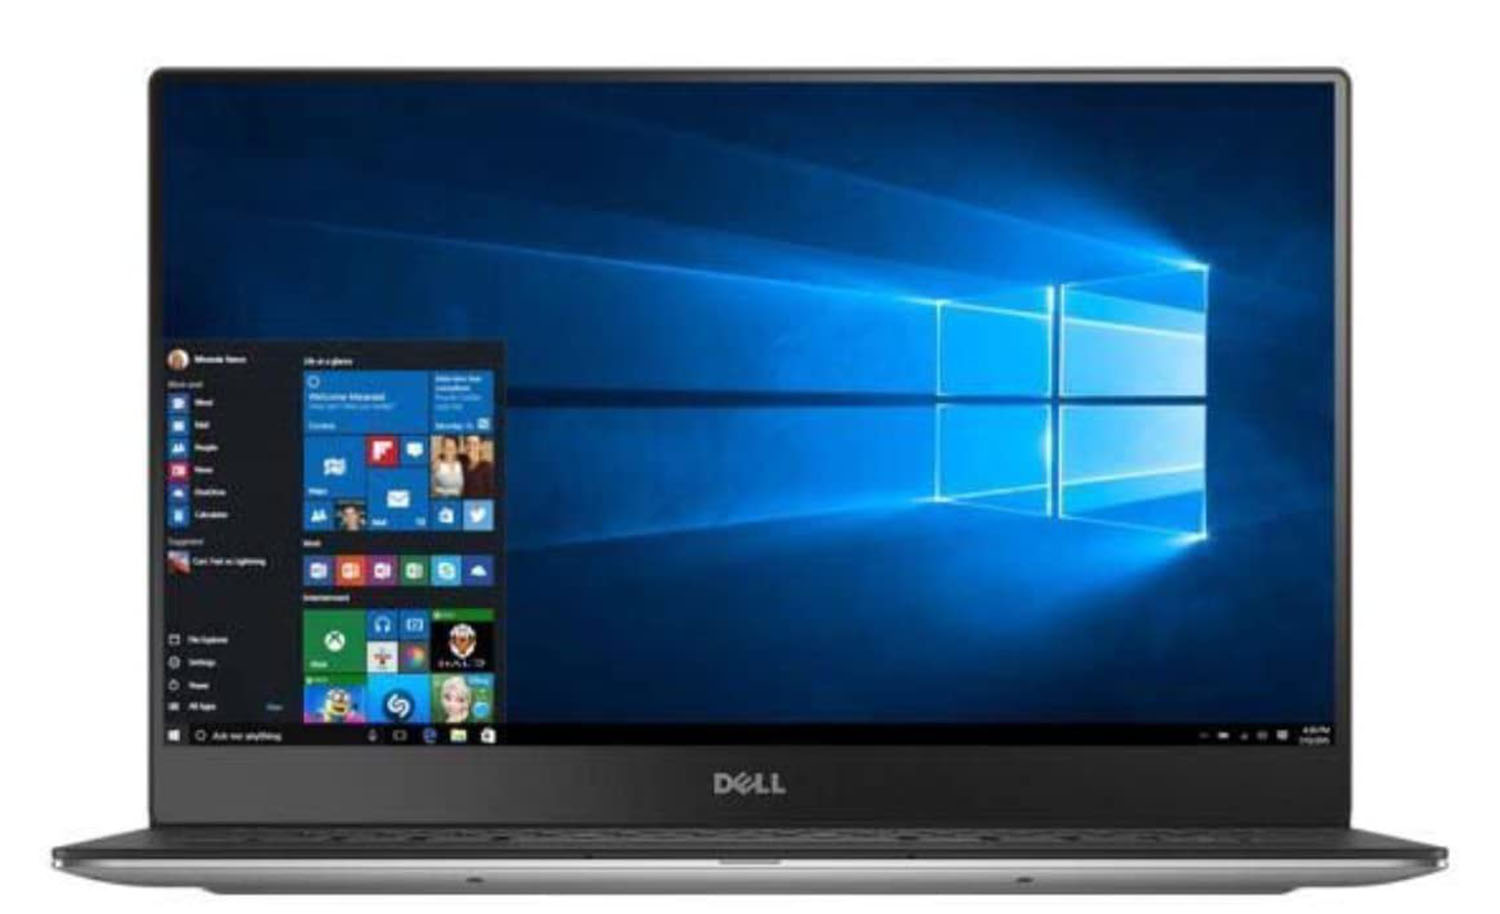 Dell XPS 13 9360 Intel Core i7 7th Gen 16GB RAM 512GB SSD Touchscreen Windows 10 Pro